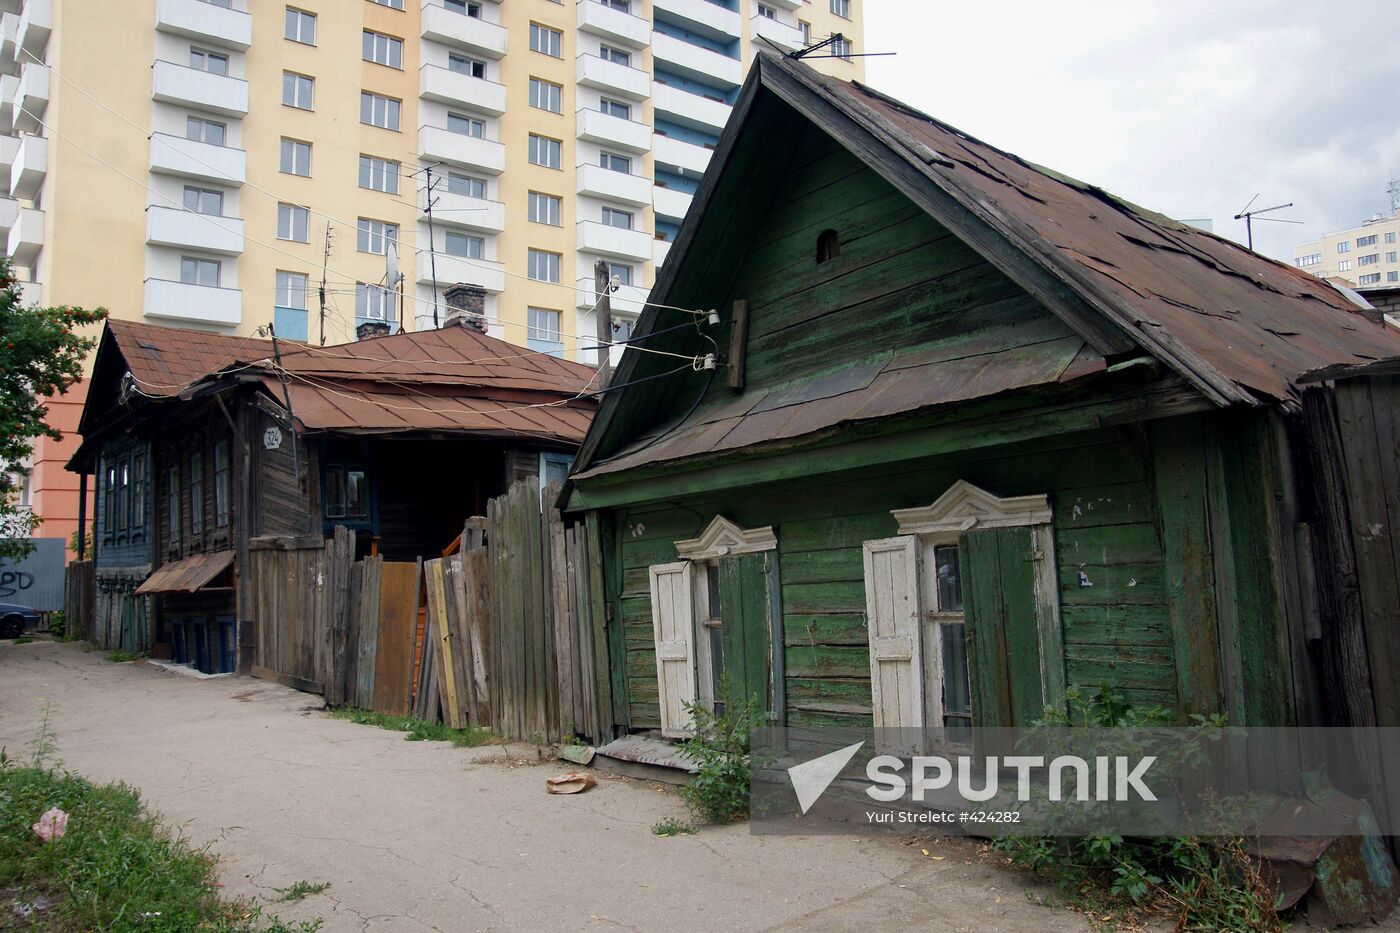 Dilapidated accommodation